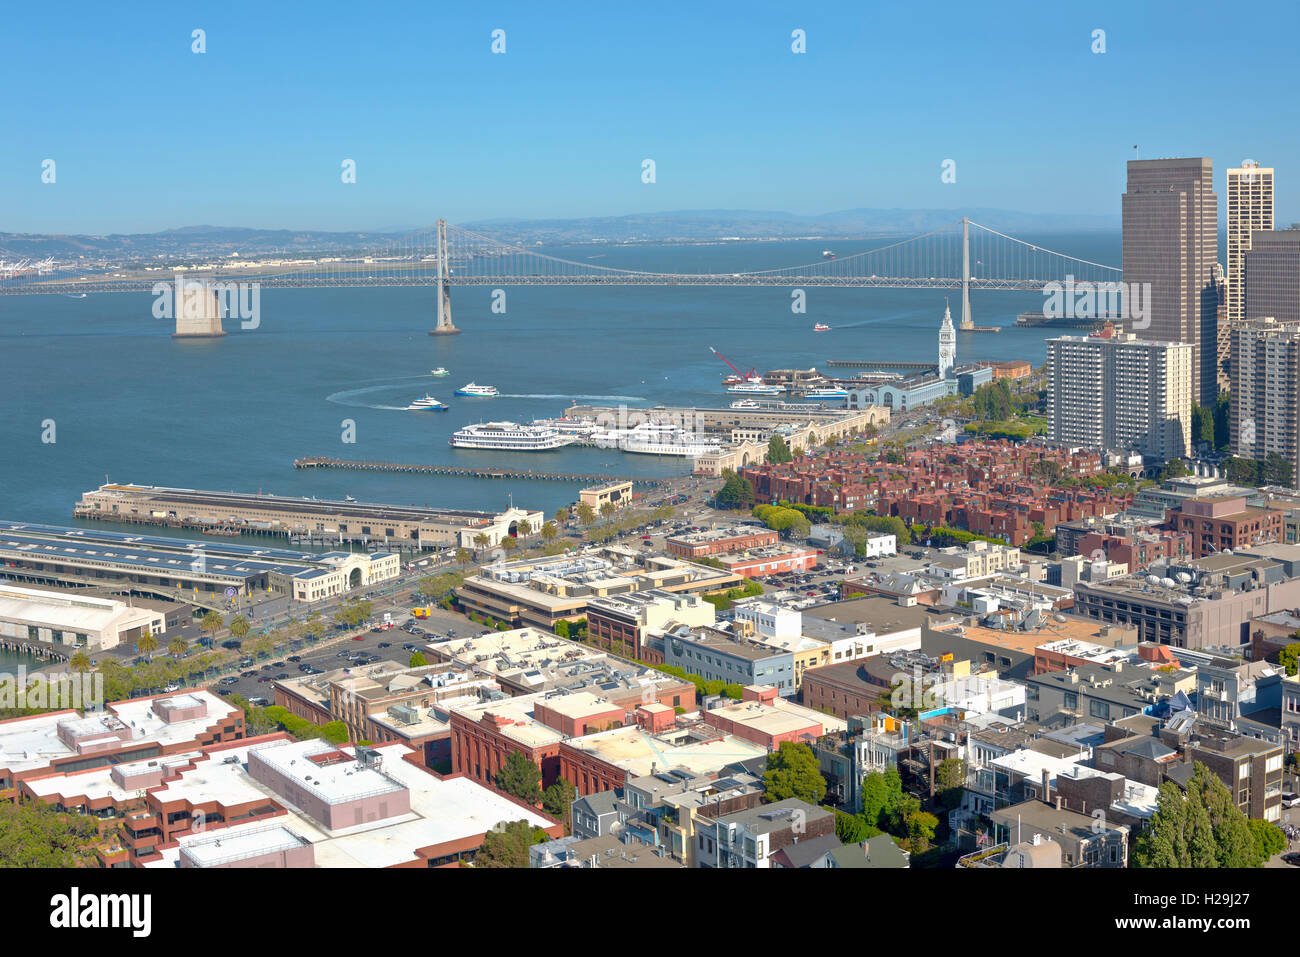 San Francisco California Embarcadero blvd. piers and the Bay bridge. Stock Photo